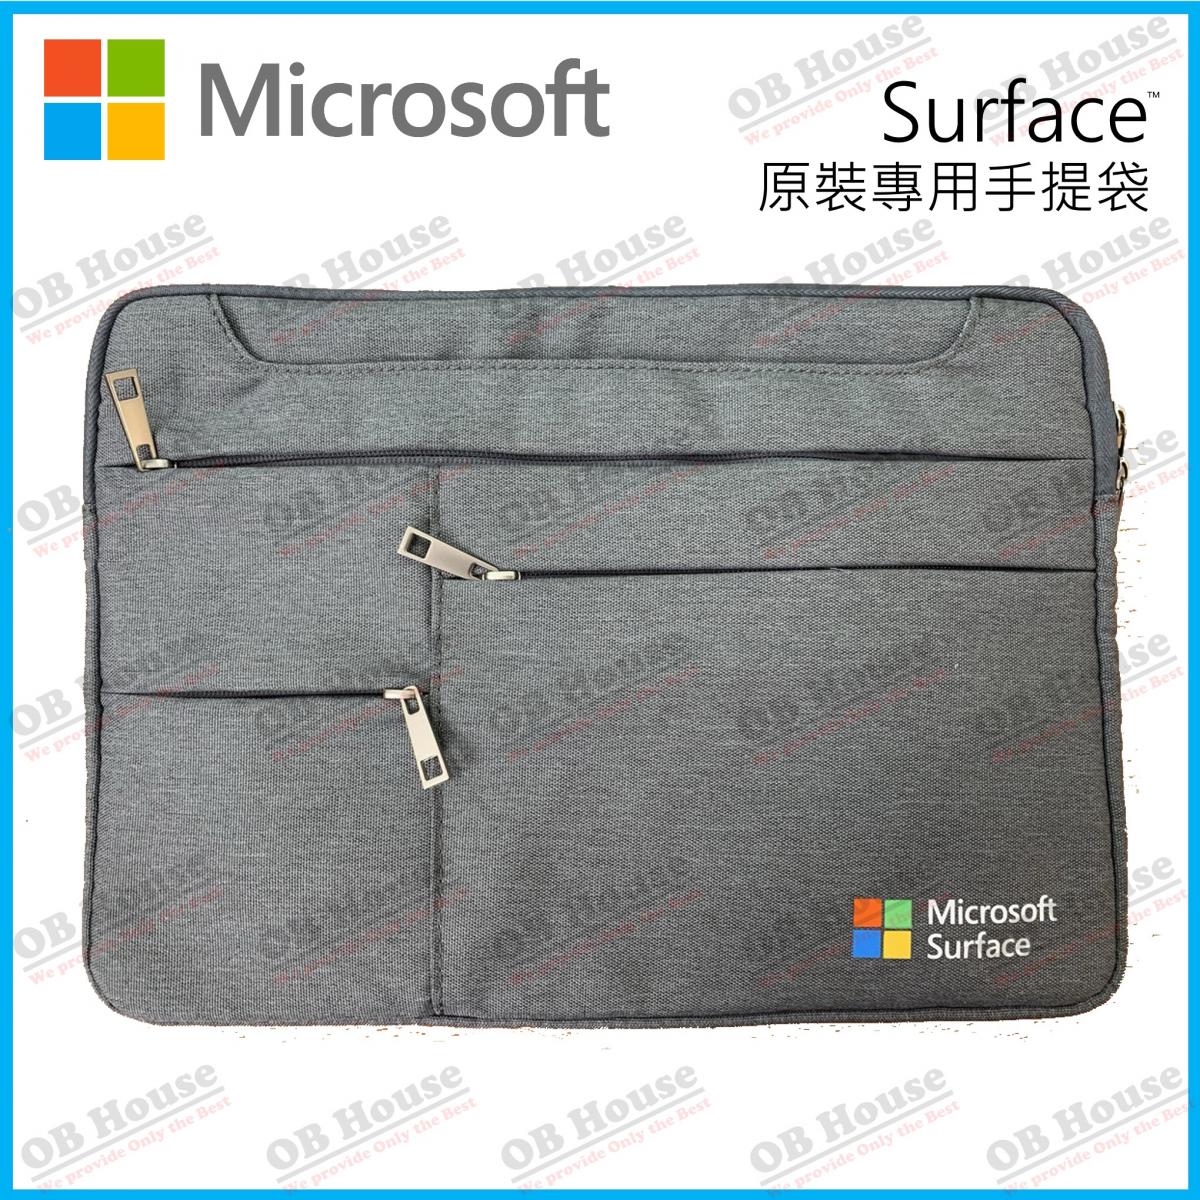 Surface 手提電腦袋